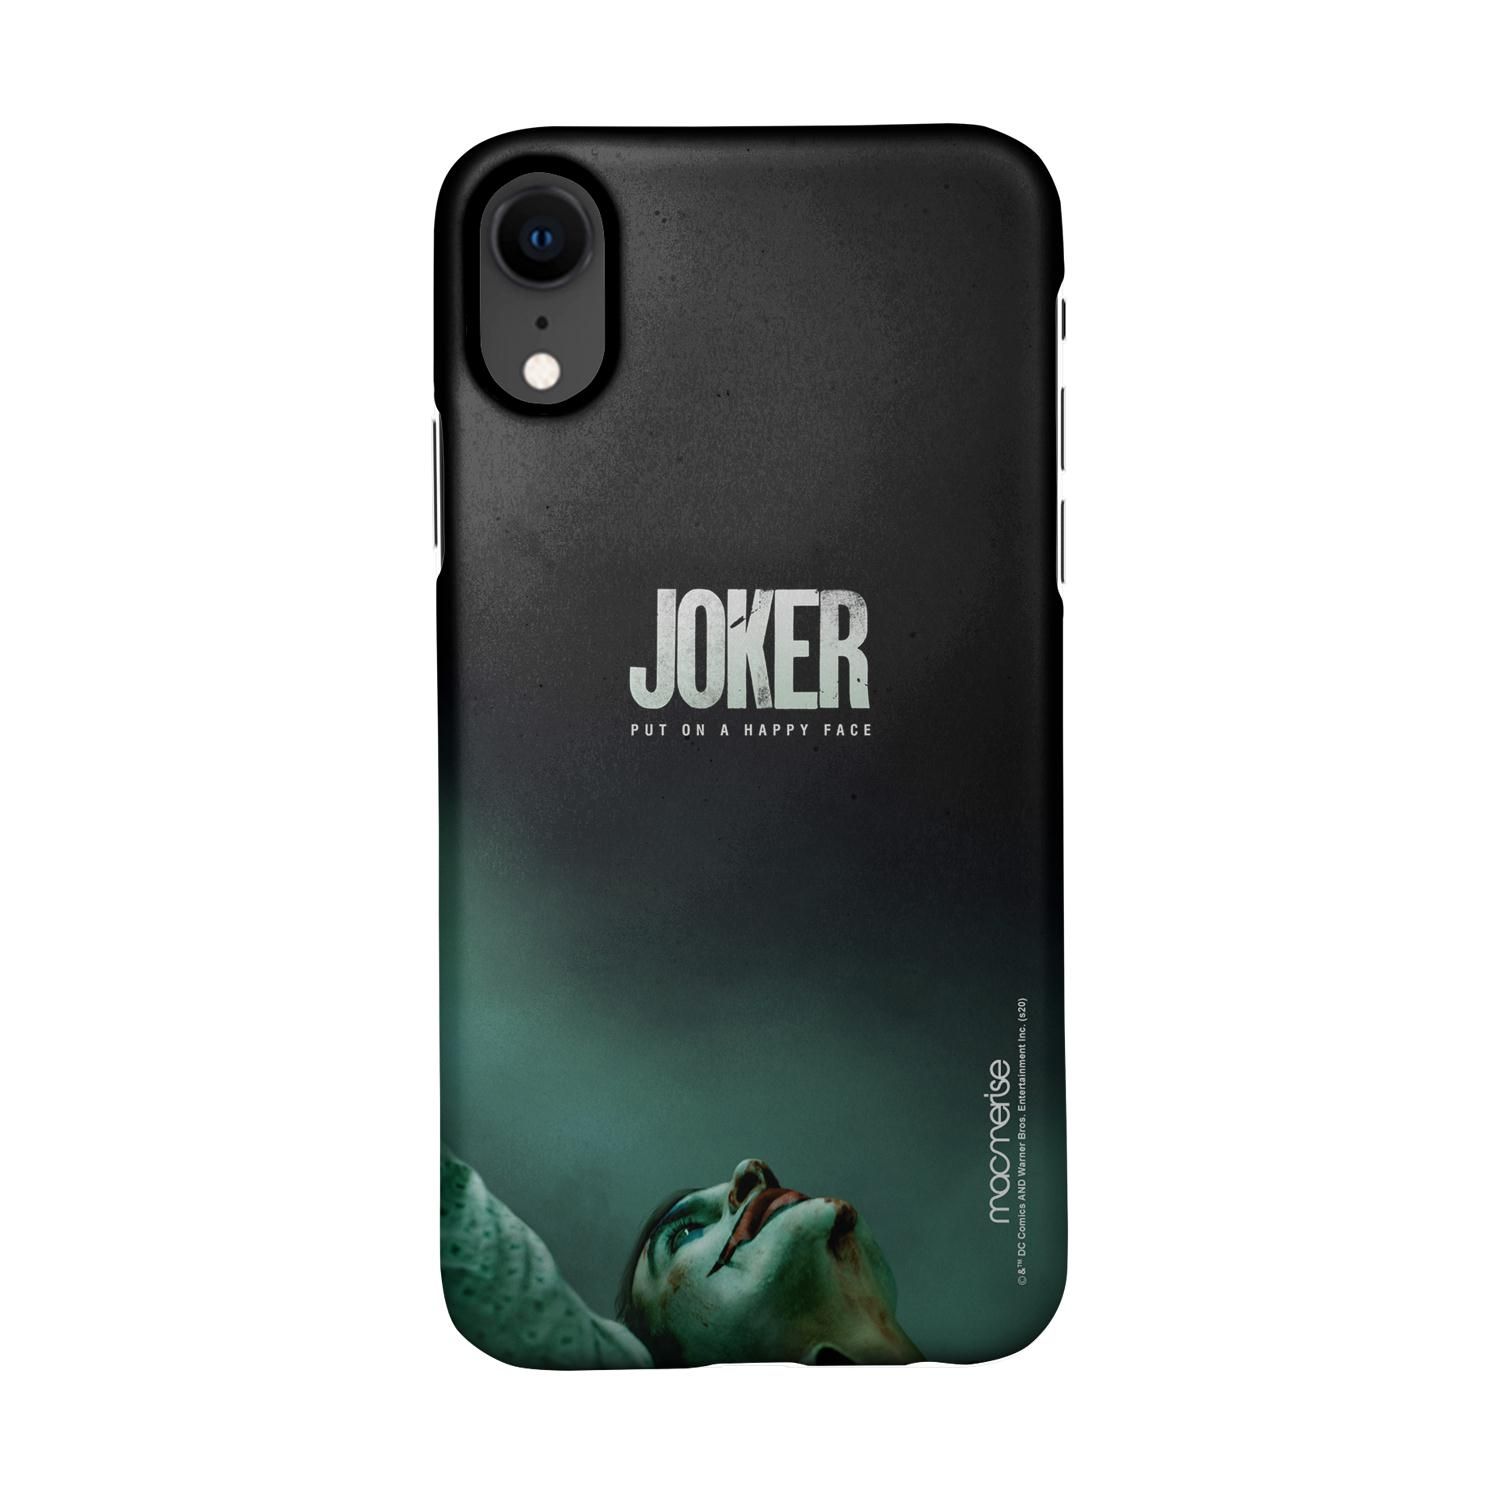 Buy Rise of the Joker - Sleek Phone Case for iPhone XR Online